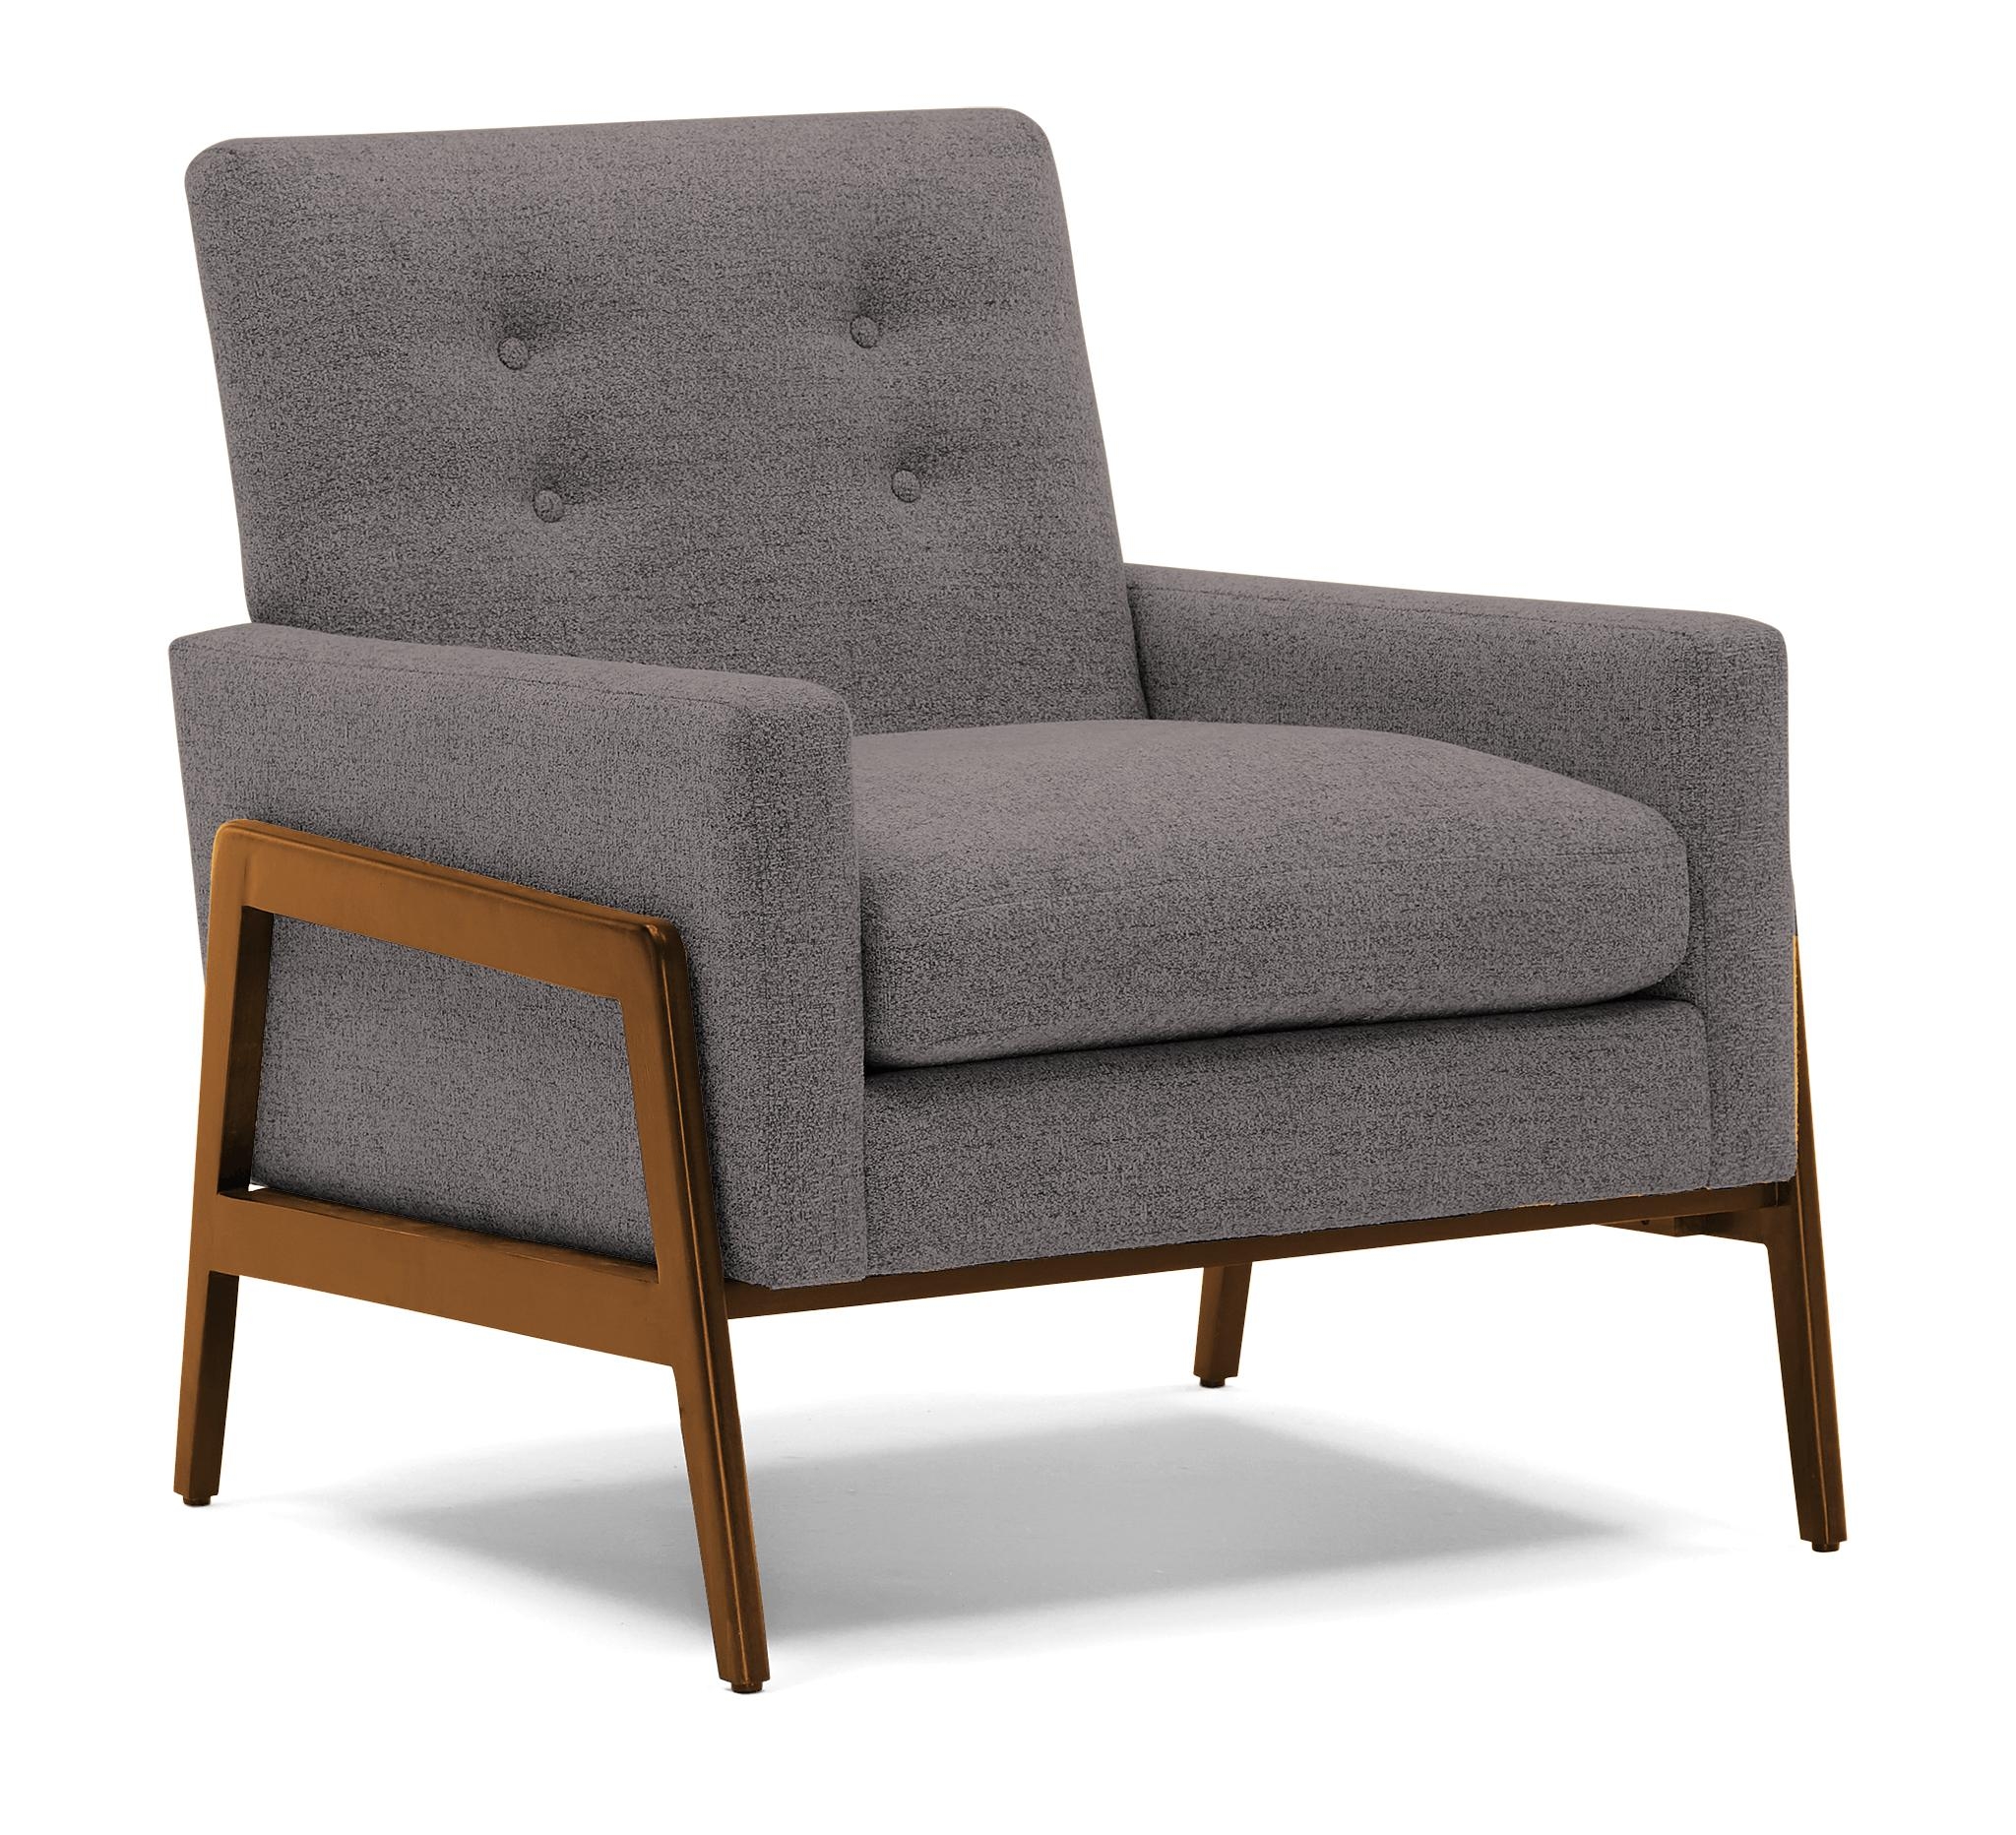 Gray Clyde Mid Century Modern Chair - Taylor Felt Grey - Mocha - Image 1